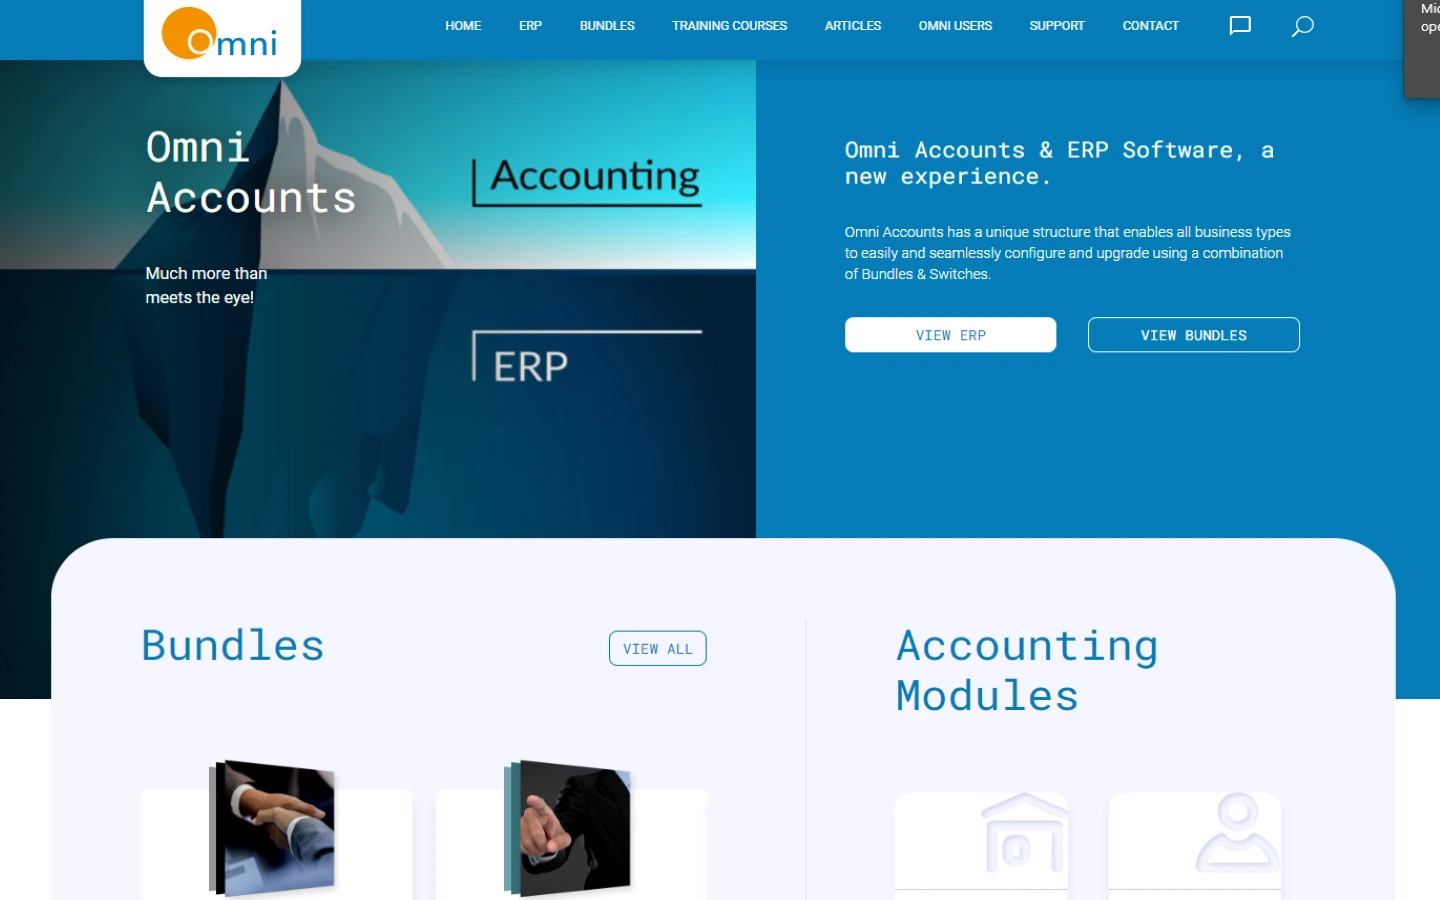 Omni - Accounts and ERP